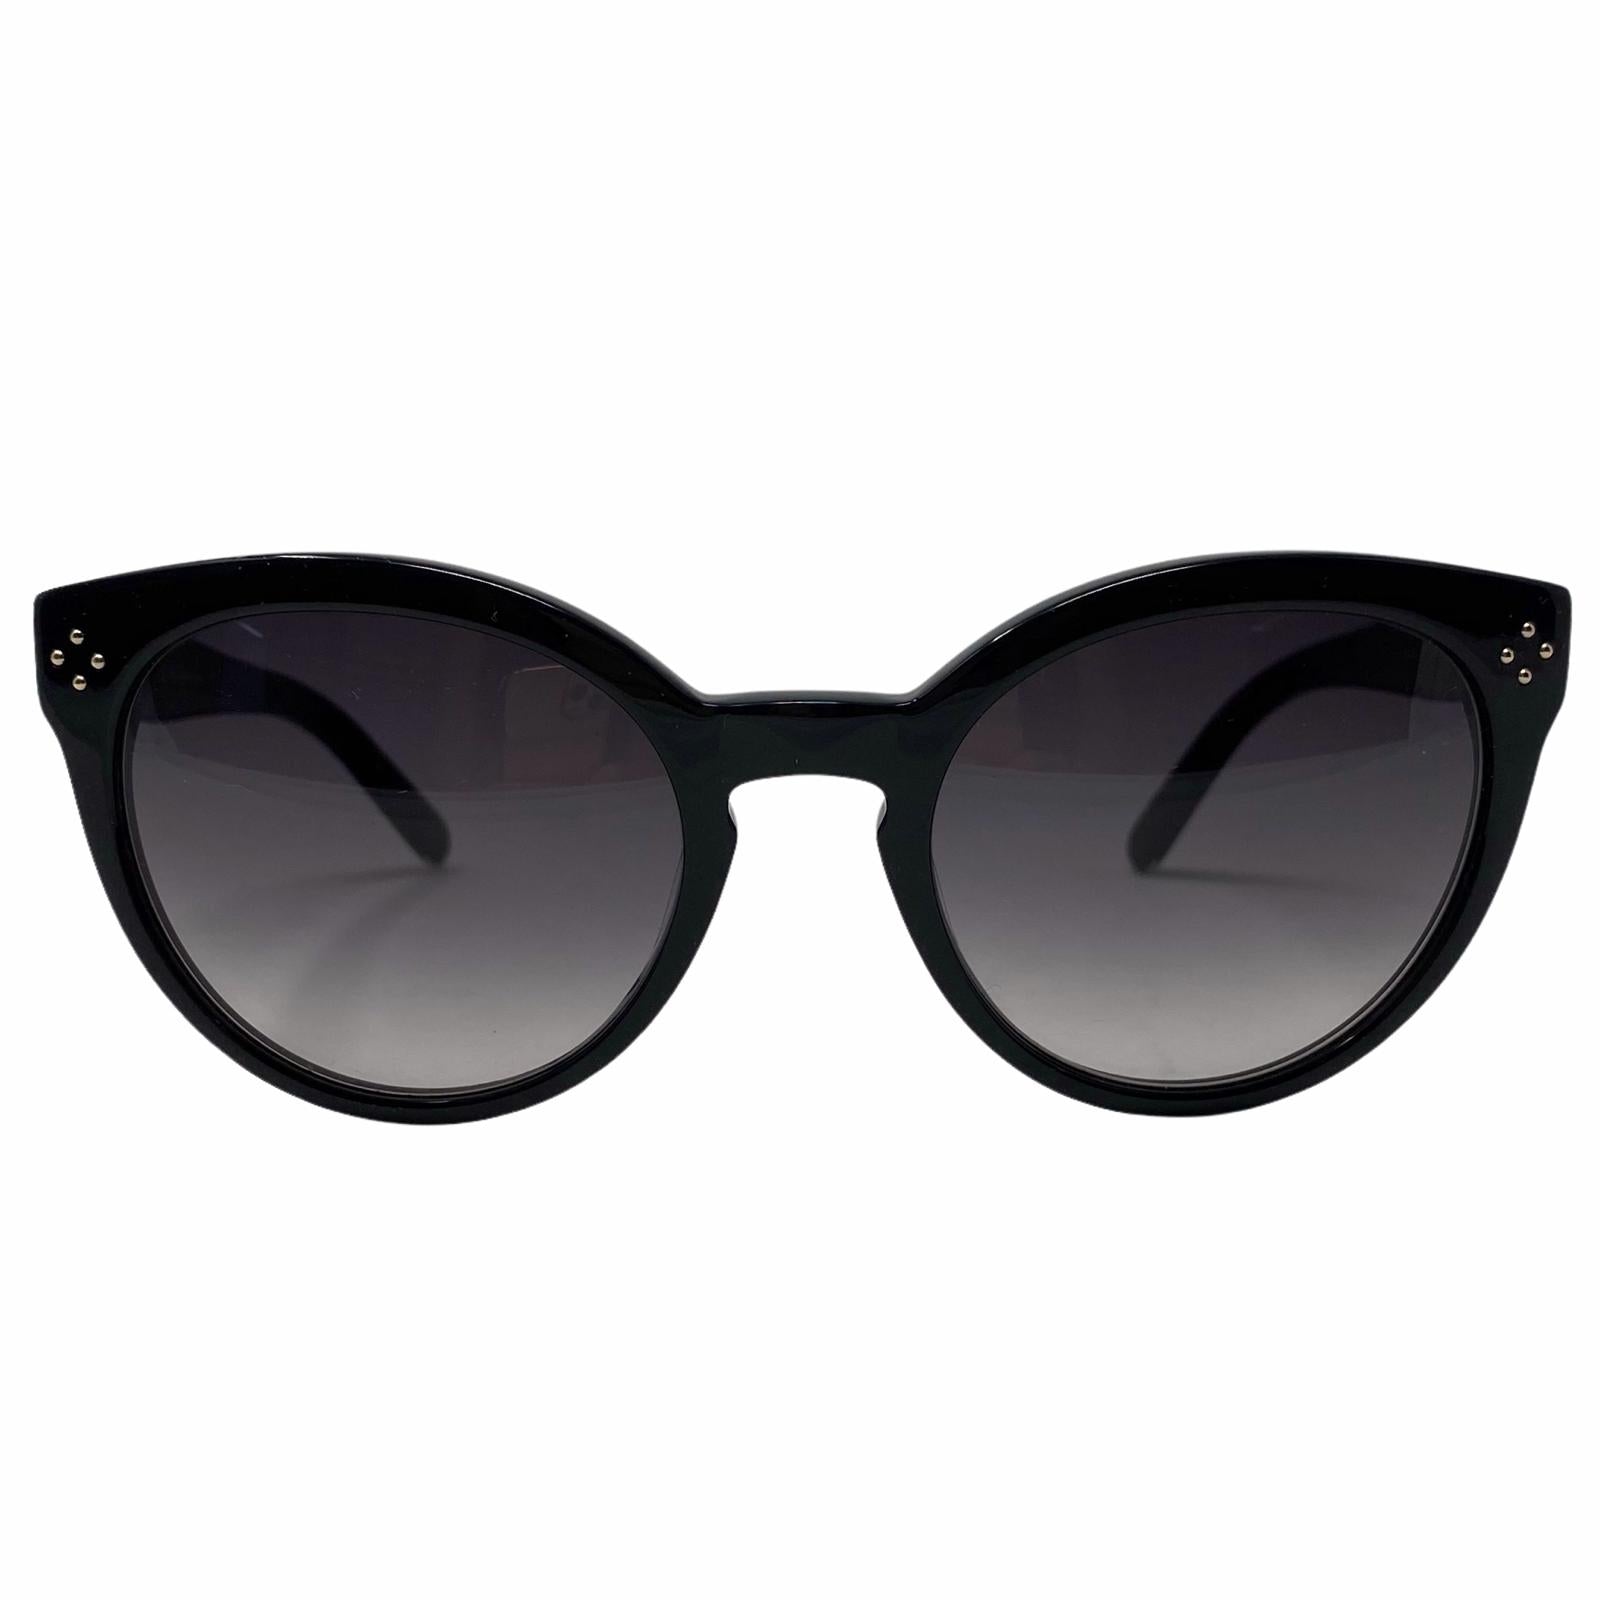 Chloe Black Cat Eye Sunglasses CE691S